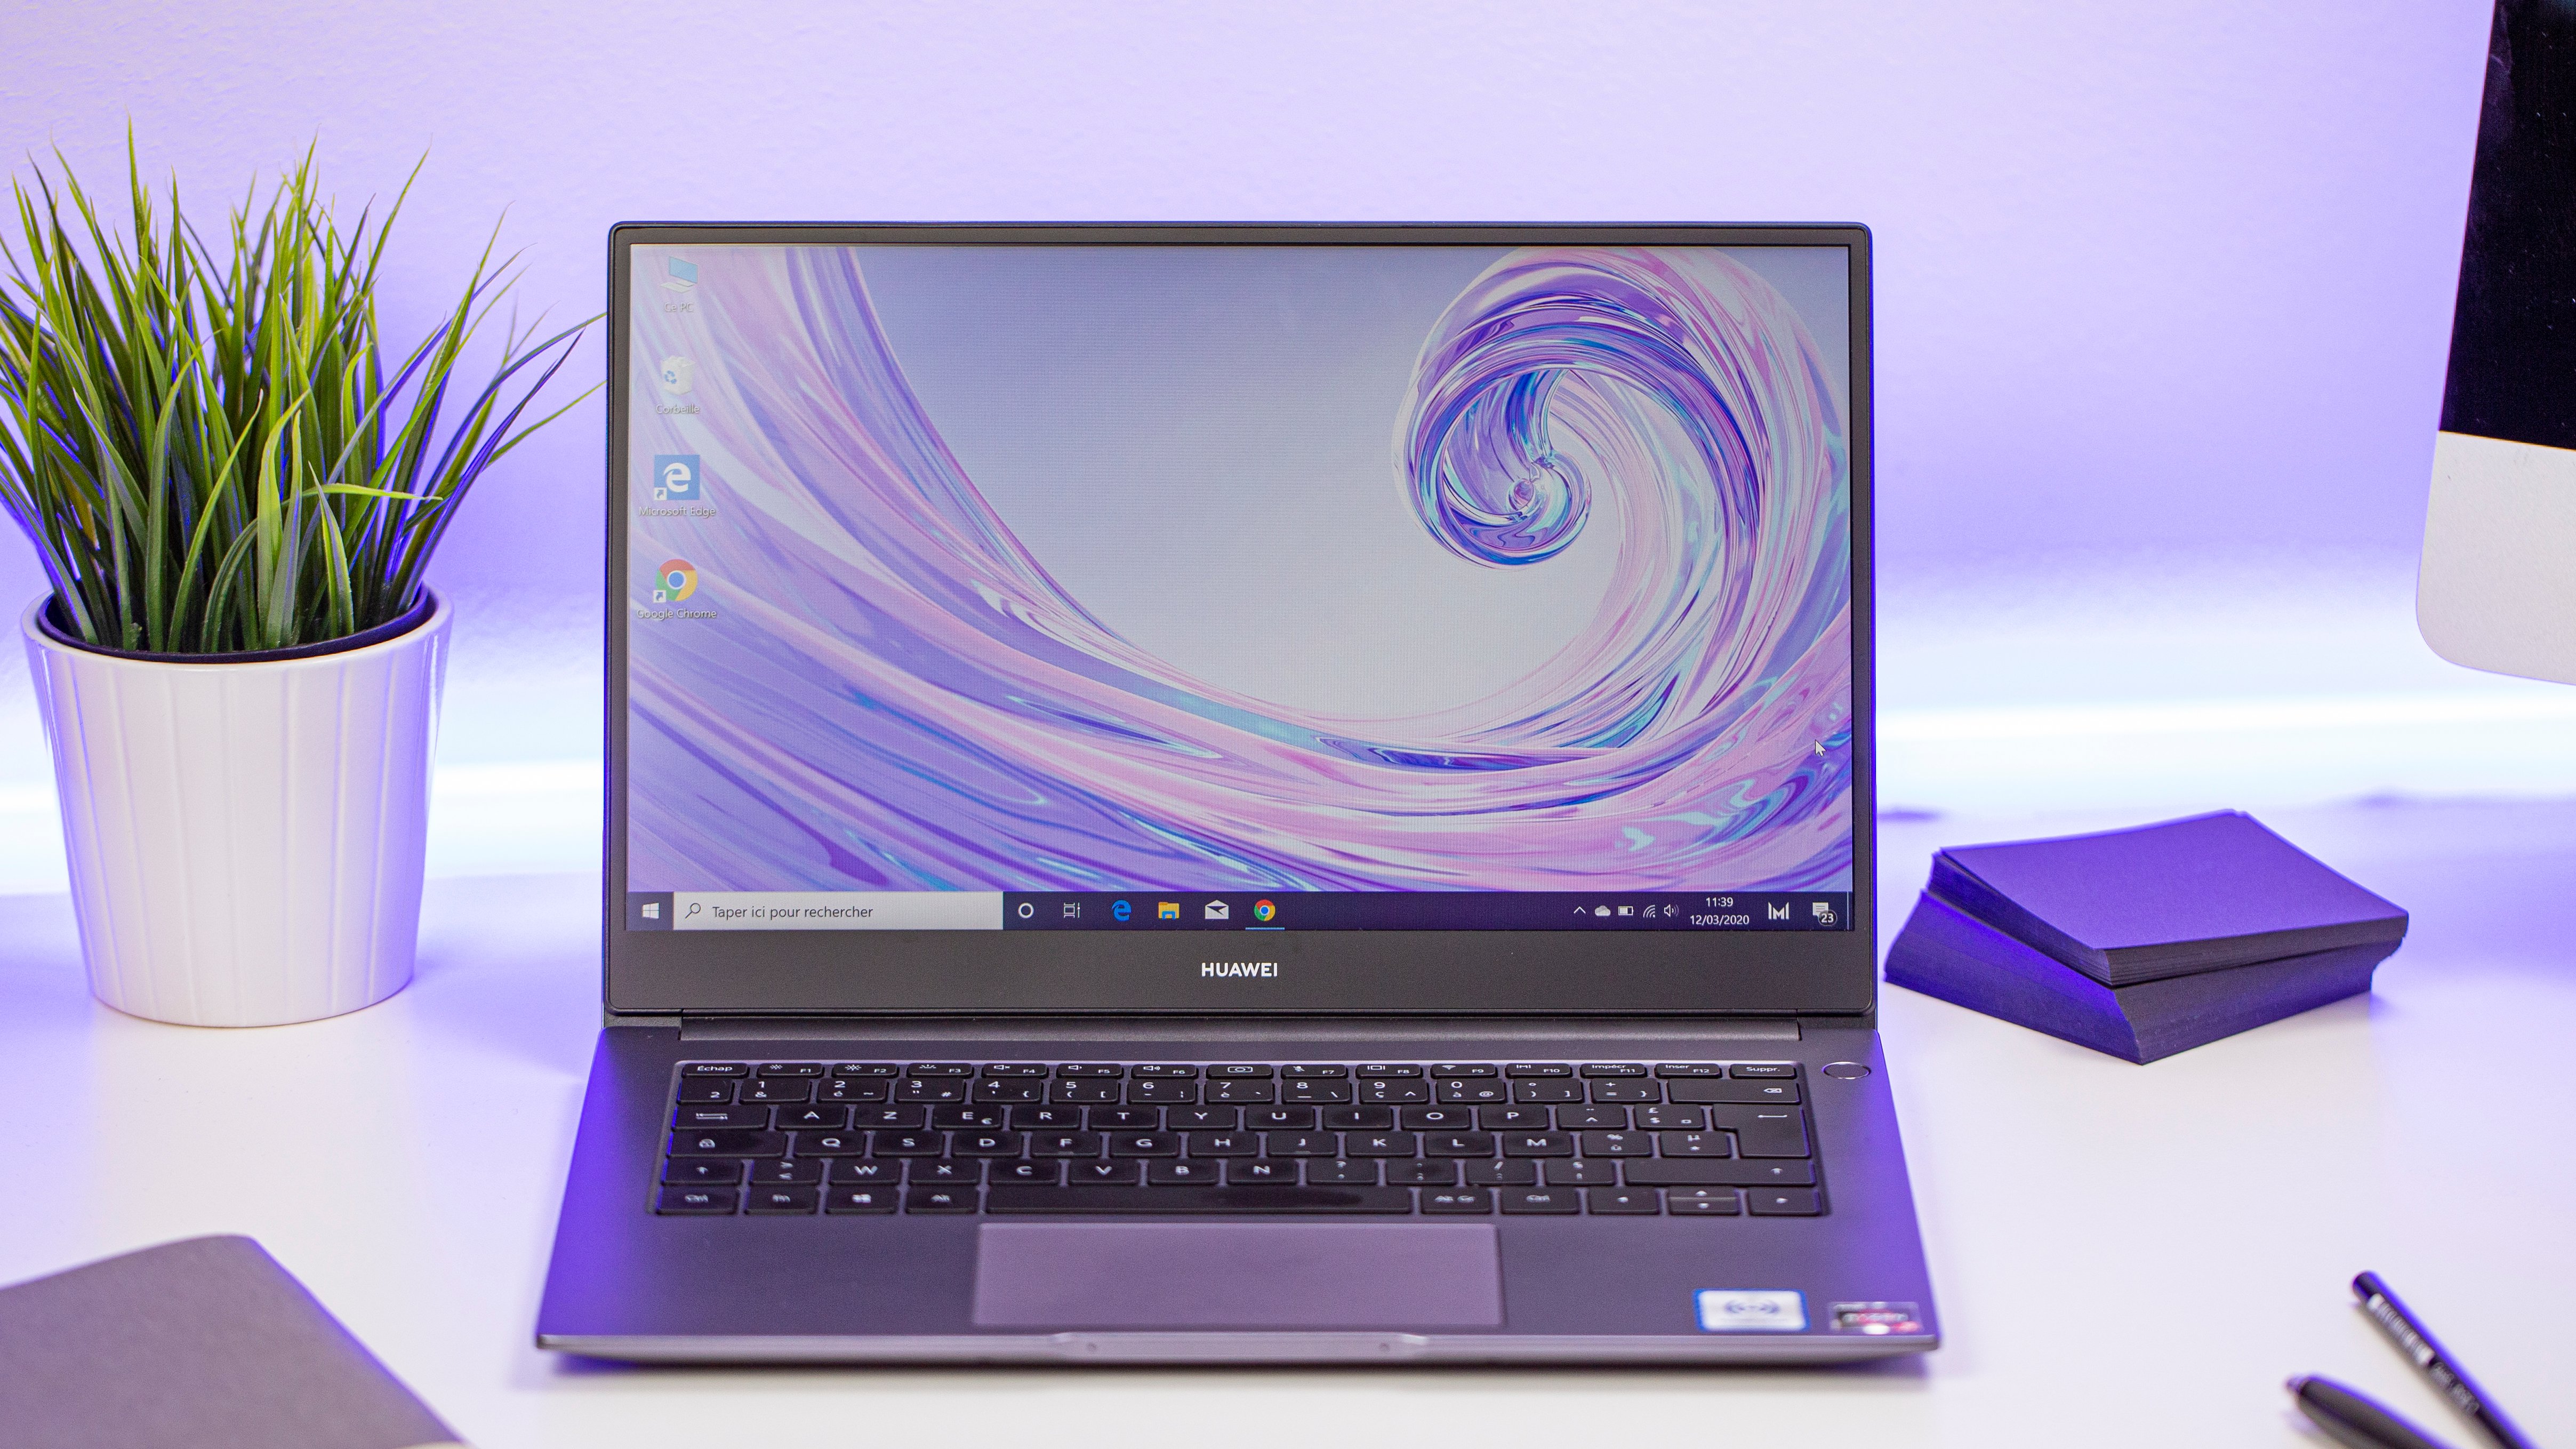 Huawei MateBook D 14 laptop 2020 review and RAM upgrade shopinbrand